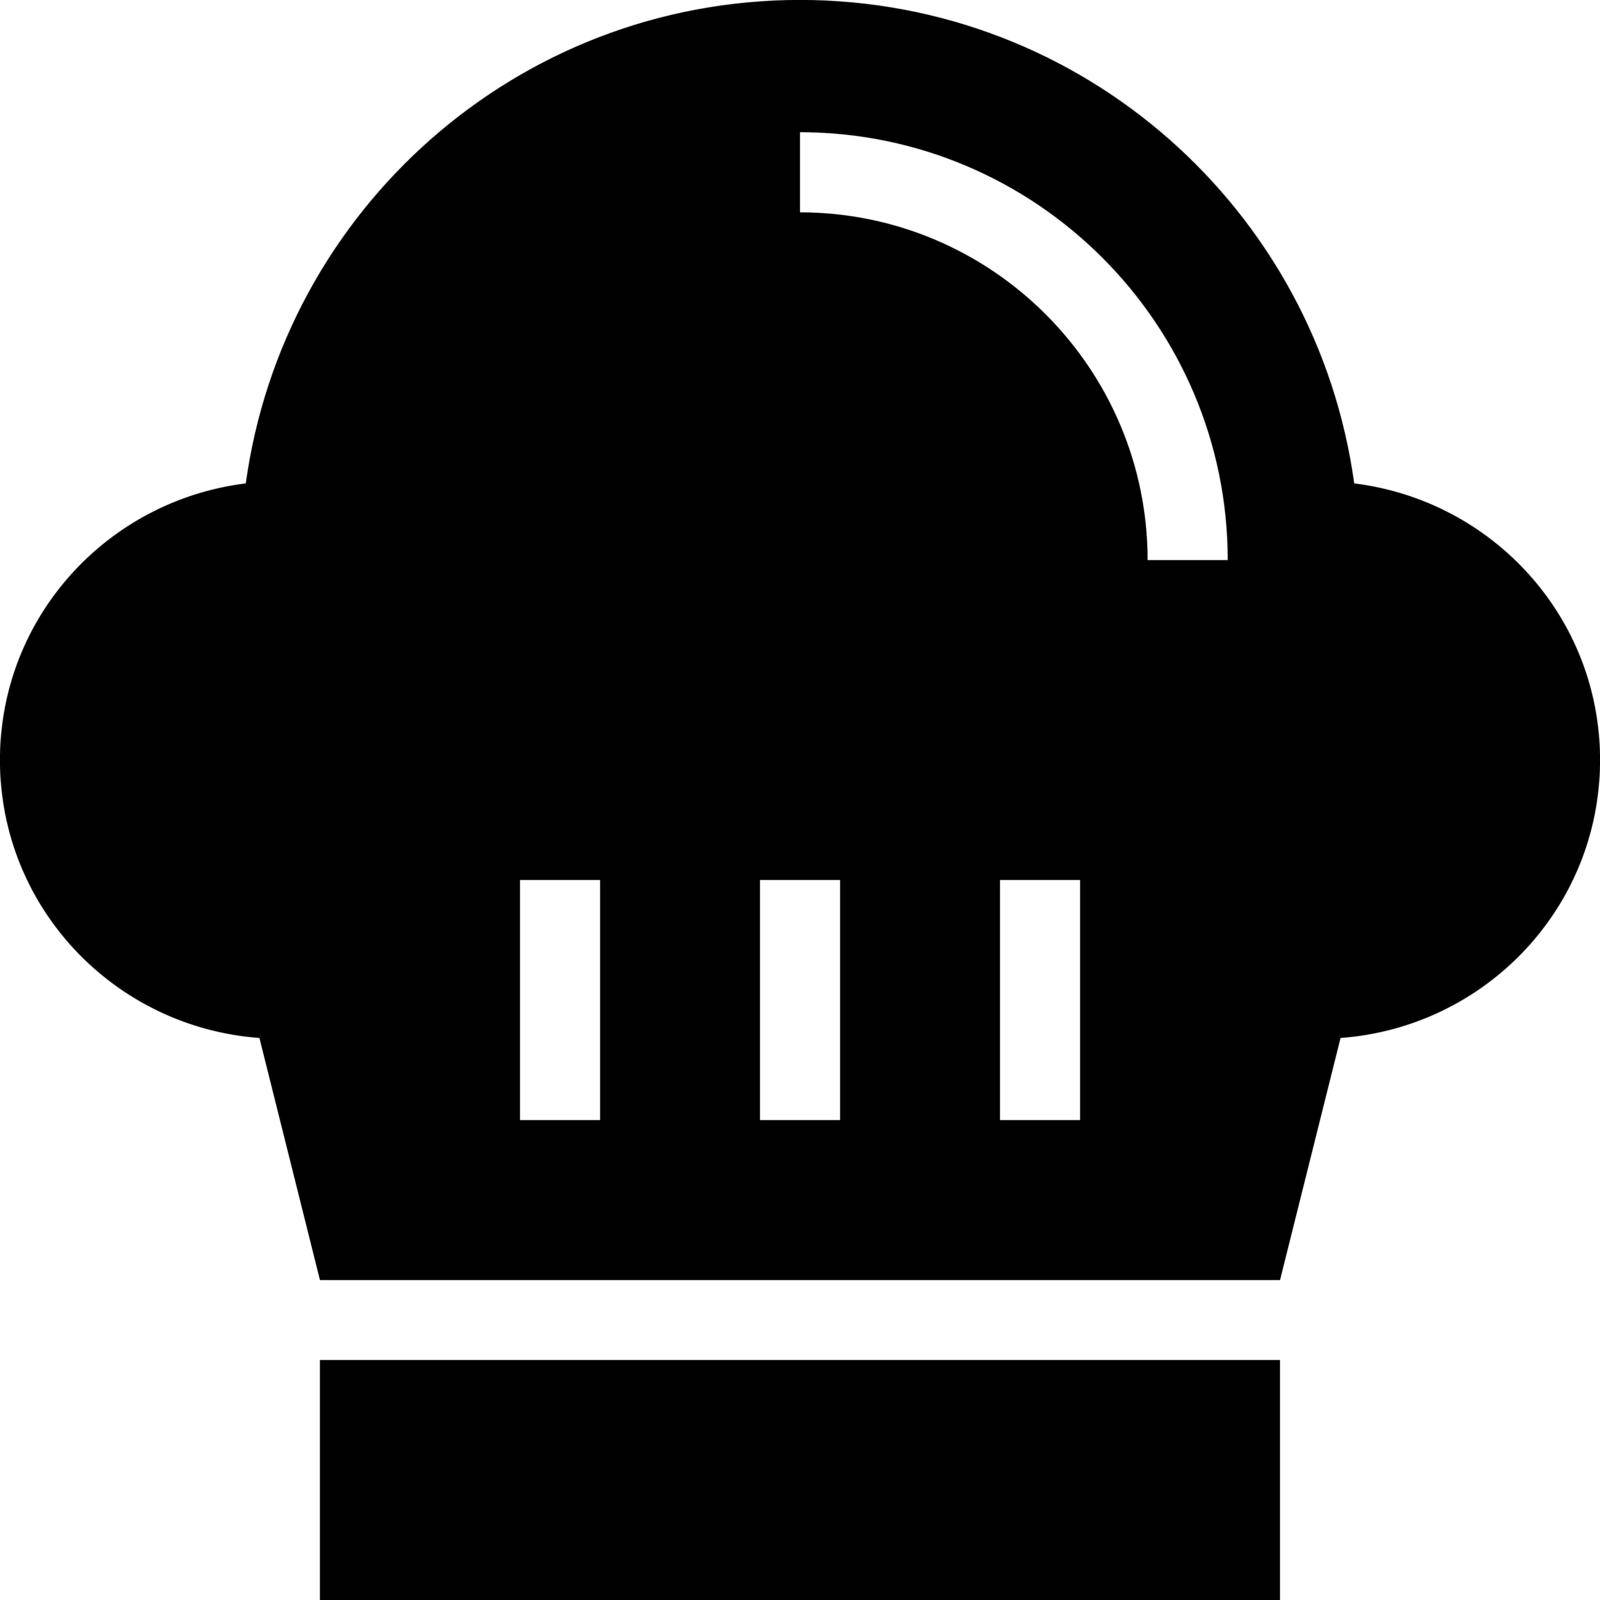 chef hat icon for decoration, website, web, presentation, printing, banner, logo, poster design, etc.